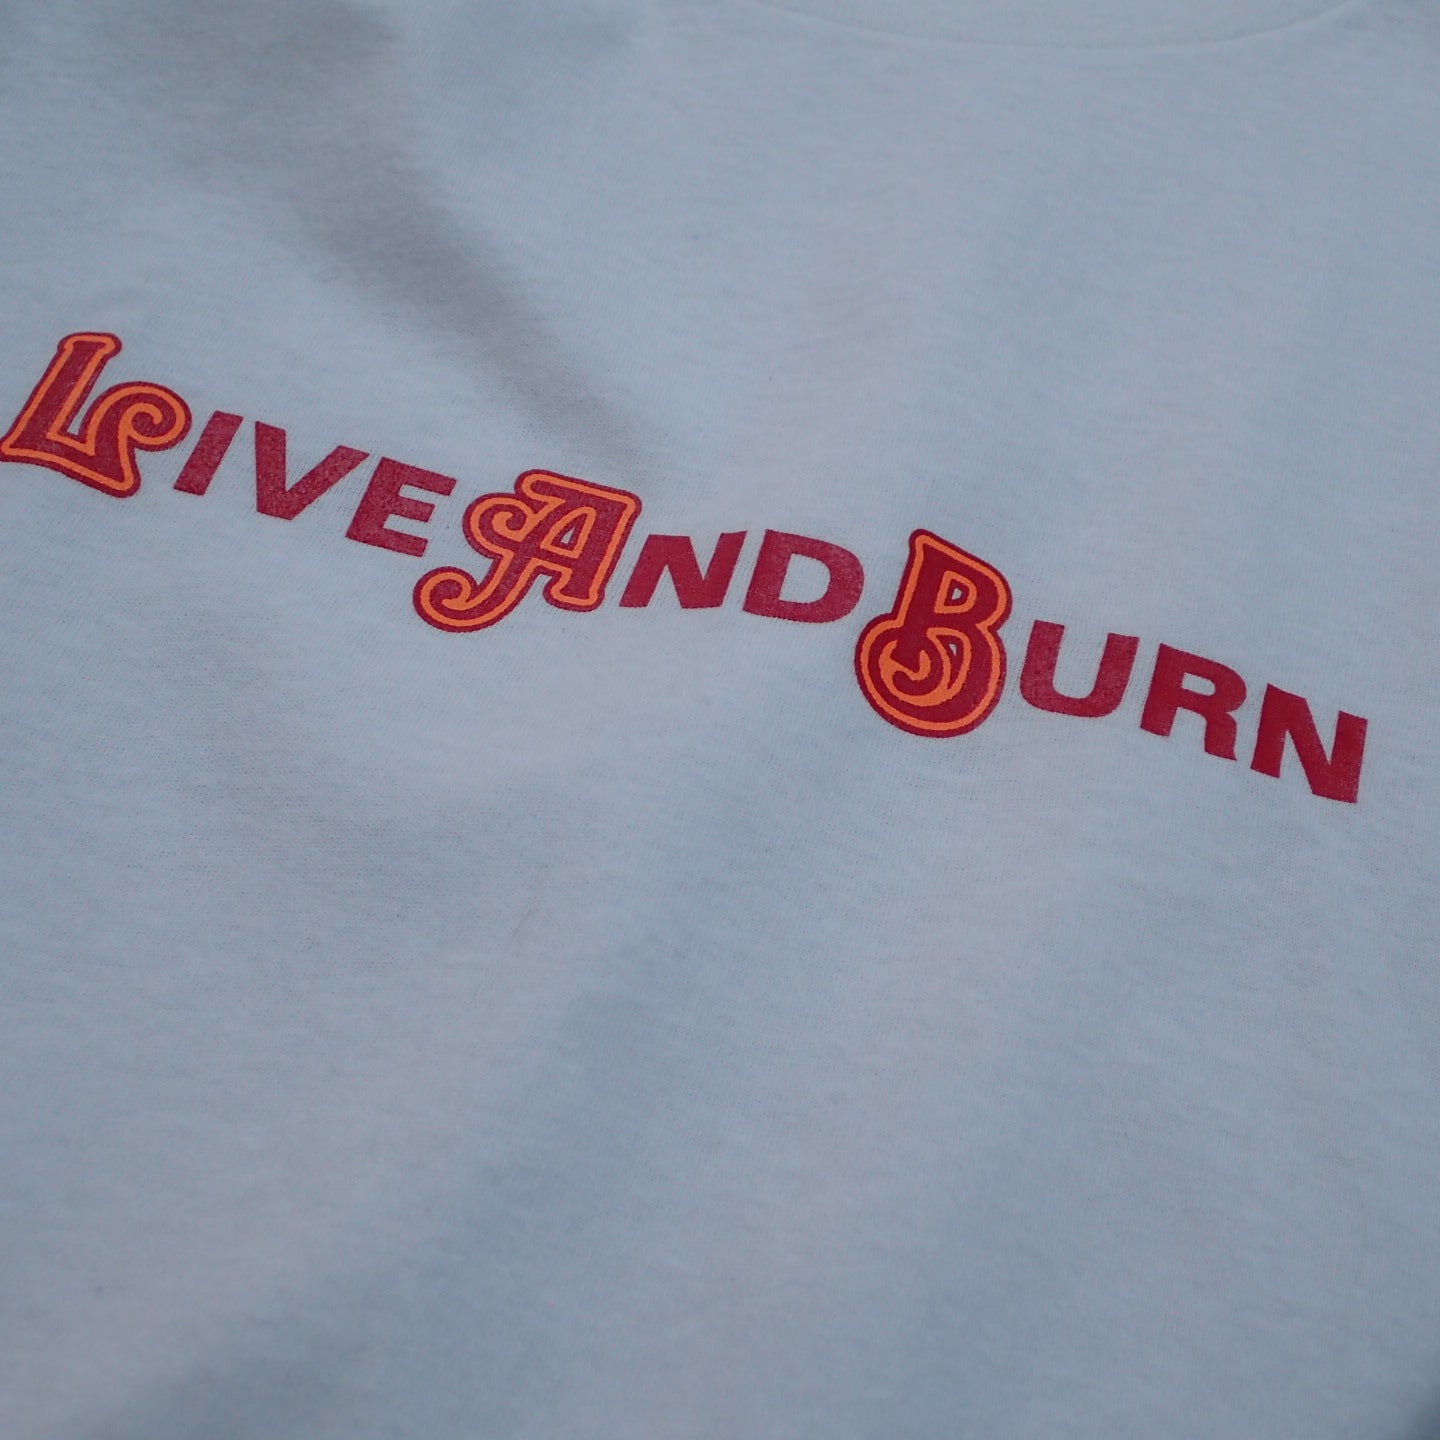 90s NHS T-shirt "Live And Burn Tee"